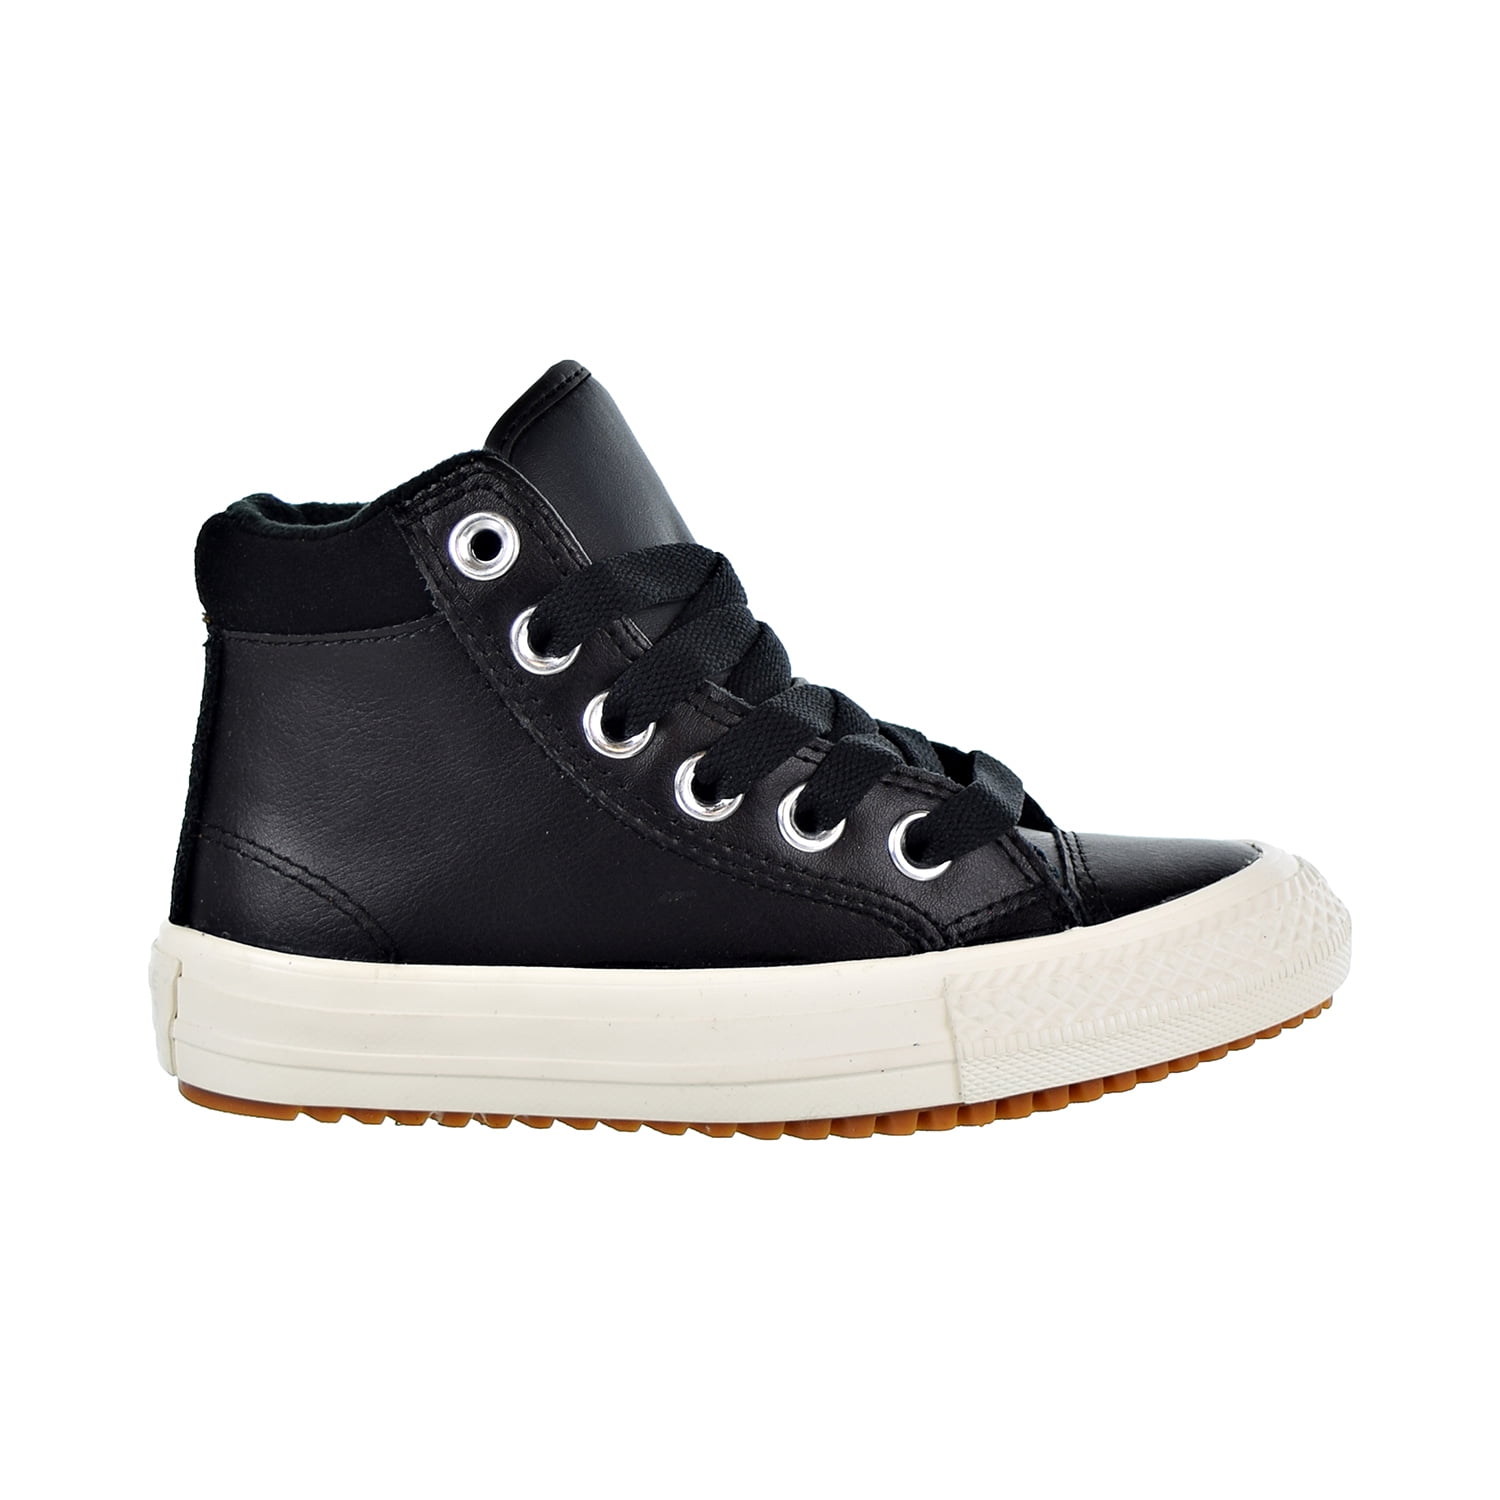 Converse Chuck Taylor All Star Big Kid's Shoes Black-Burnt Caramel 661906c  